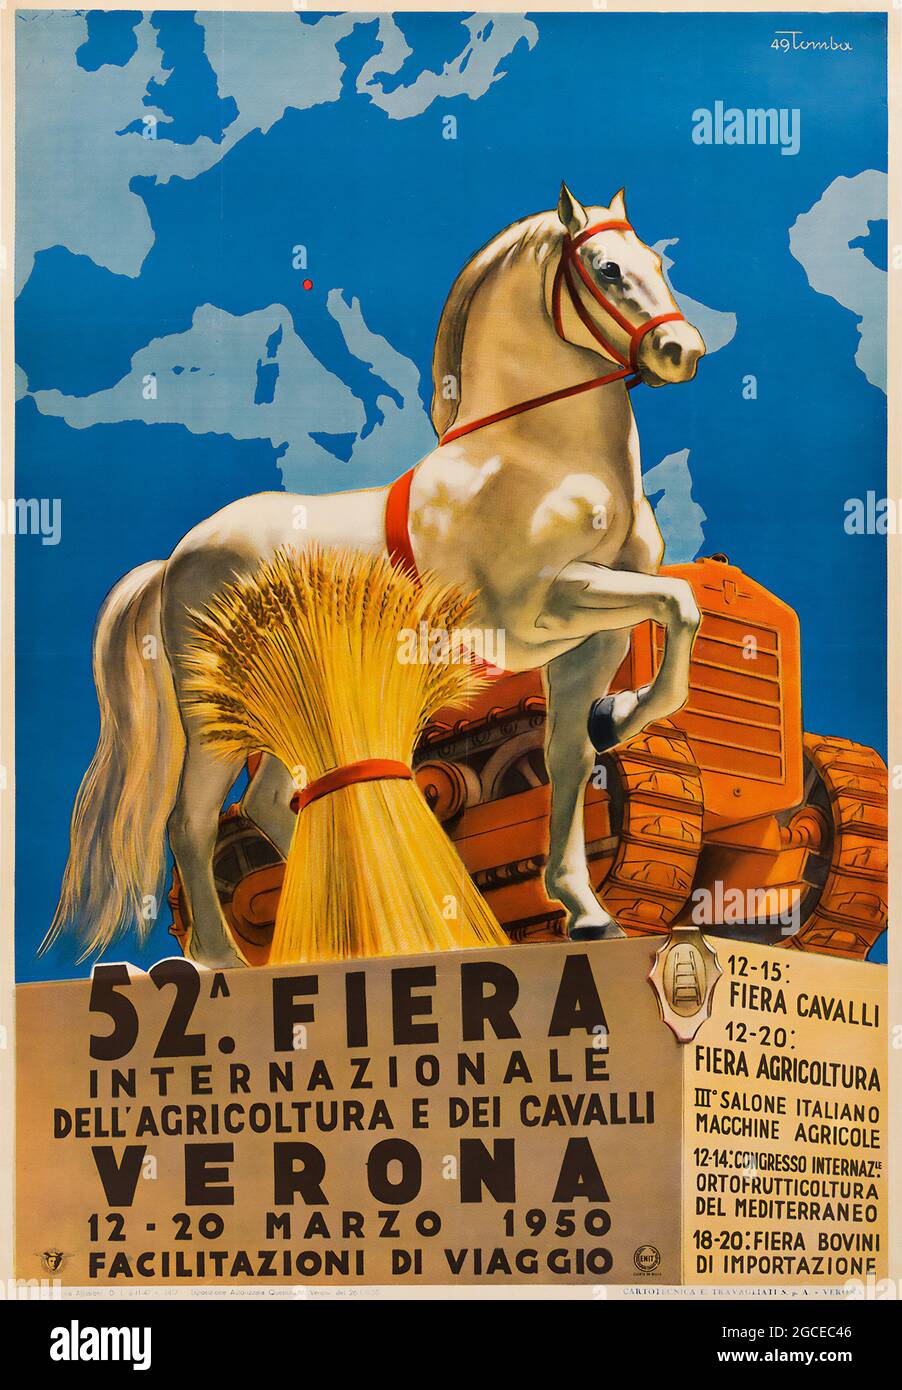 Vintage italienisches Poster. 52. Fiera. Internationale Dell'Agricoltura e dei Cavalli. Verona. 12-20 März 1950. Stockfoto